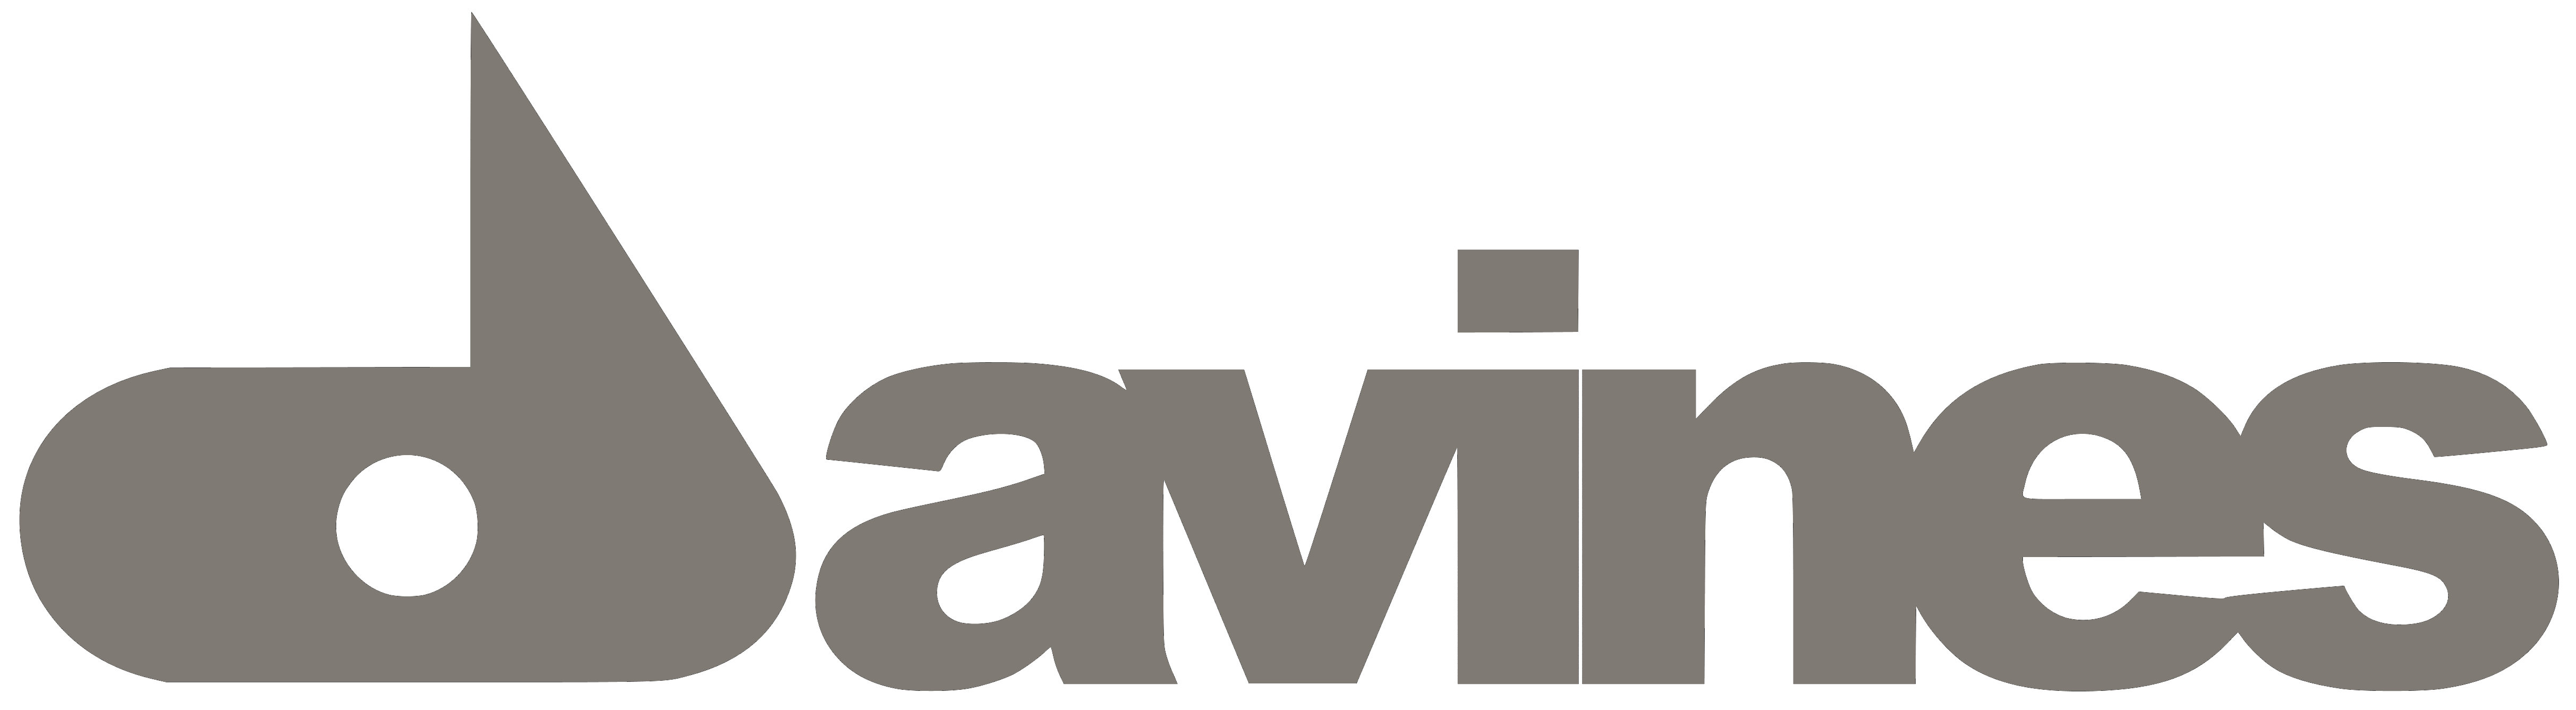 Davines logo, logotype